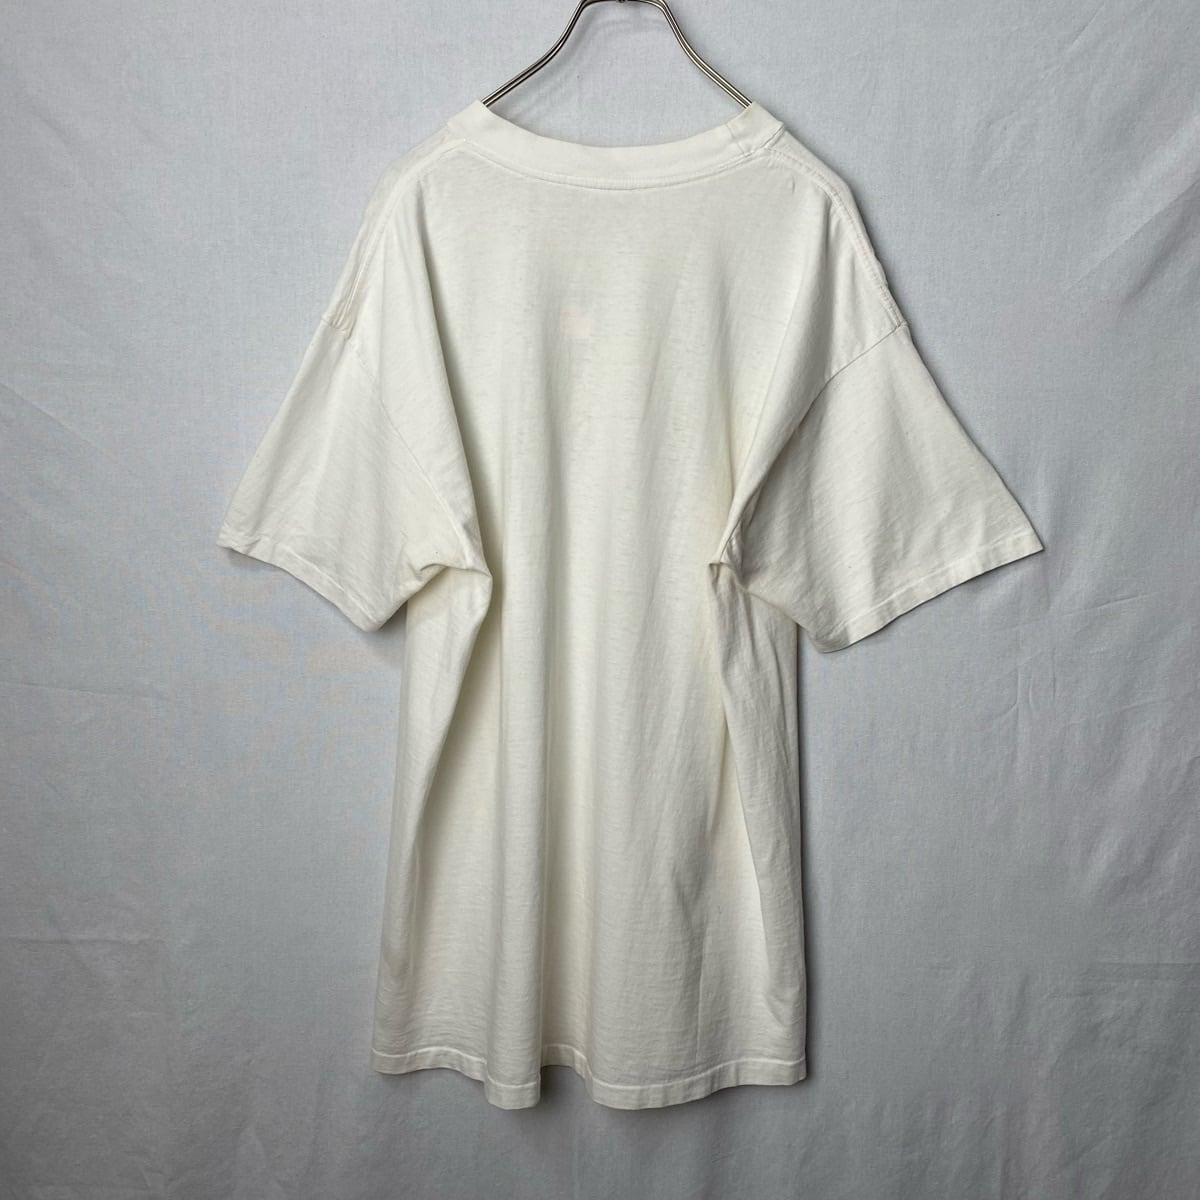 90s アート Tシャツ 古着 白 ホワイト ヴィンテージ ビンテージ 90年代